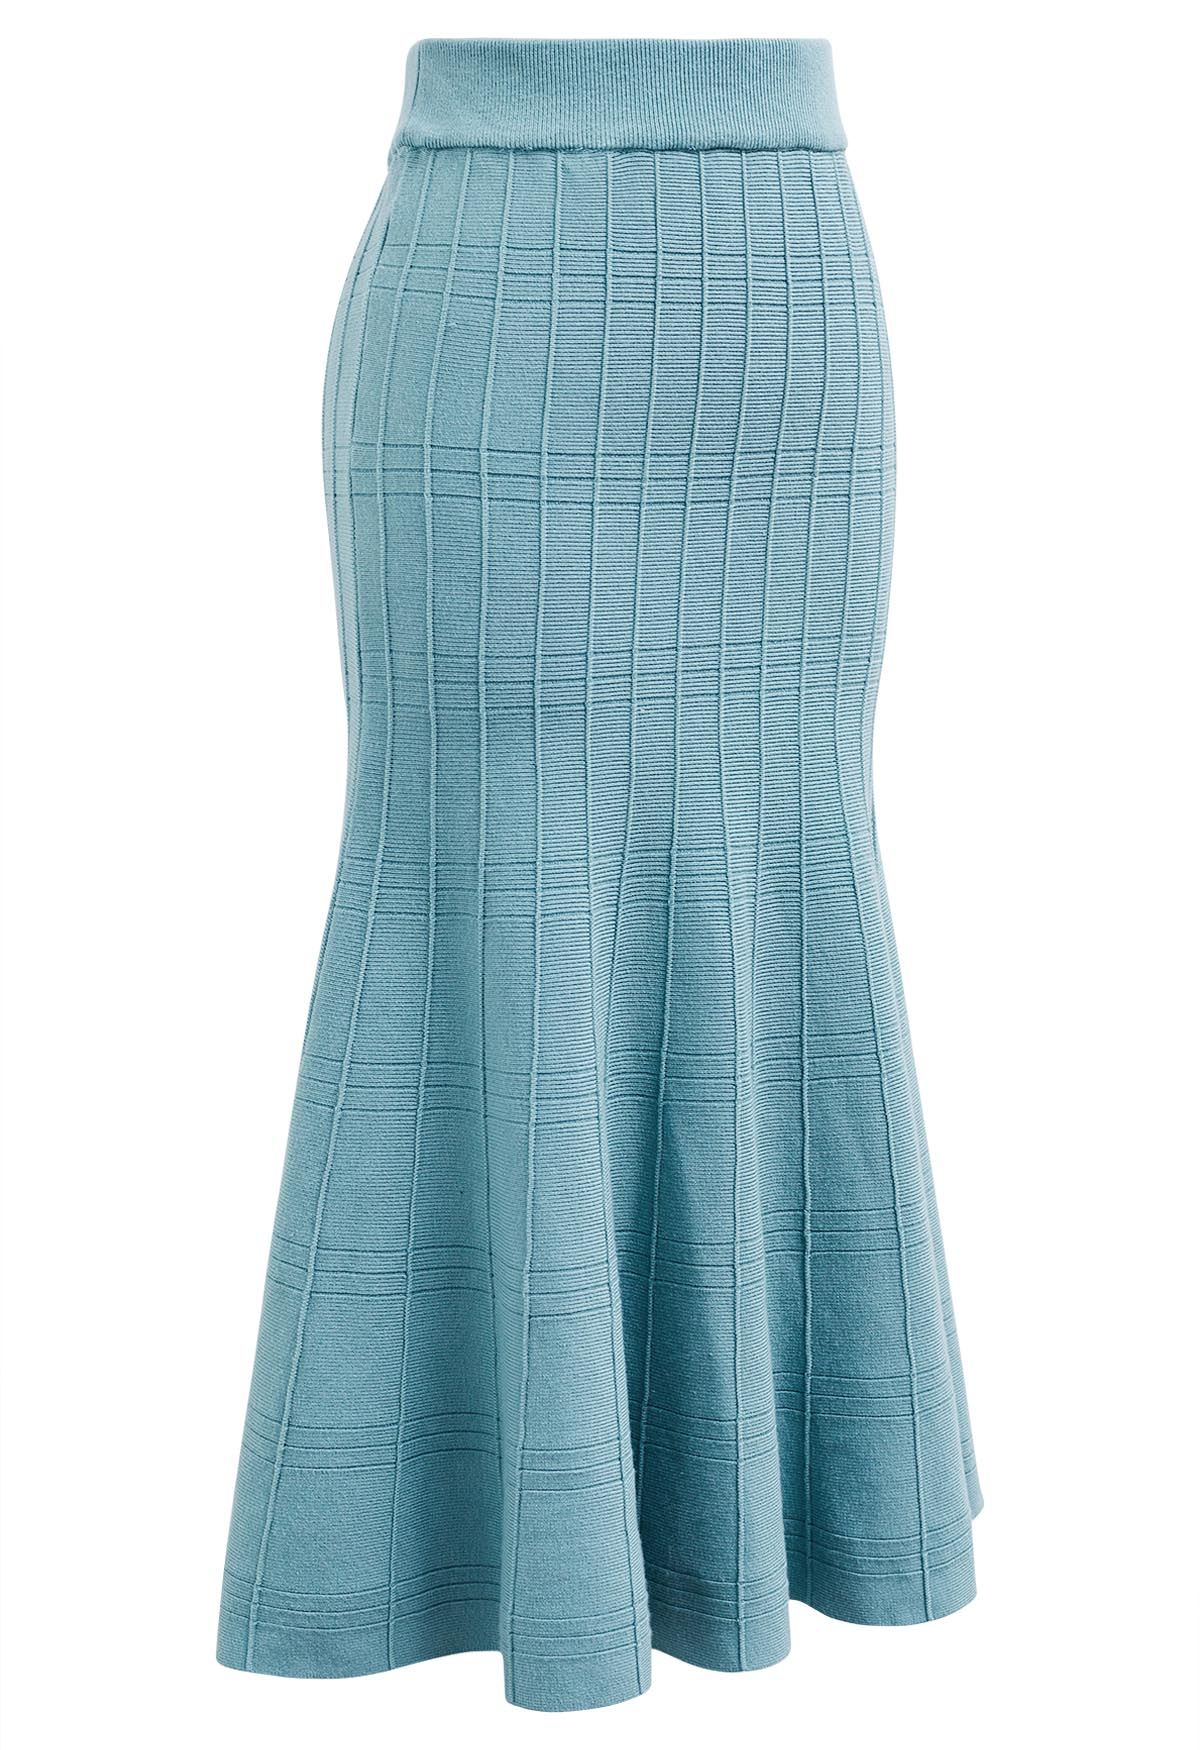 Seam Line Knit Mermaid Skirt in Turquoise